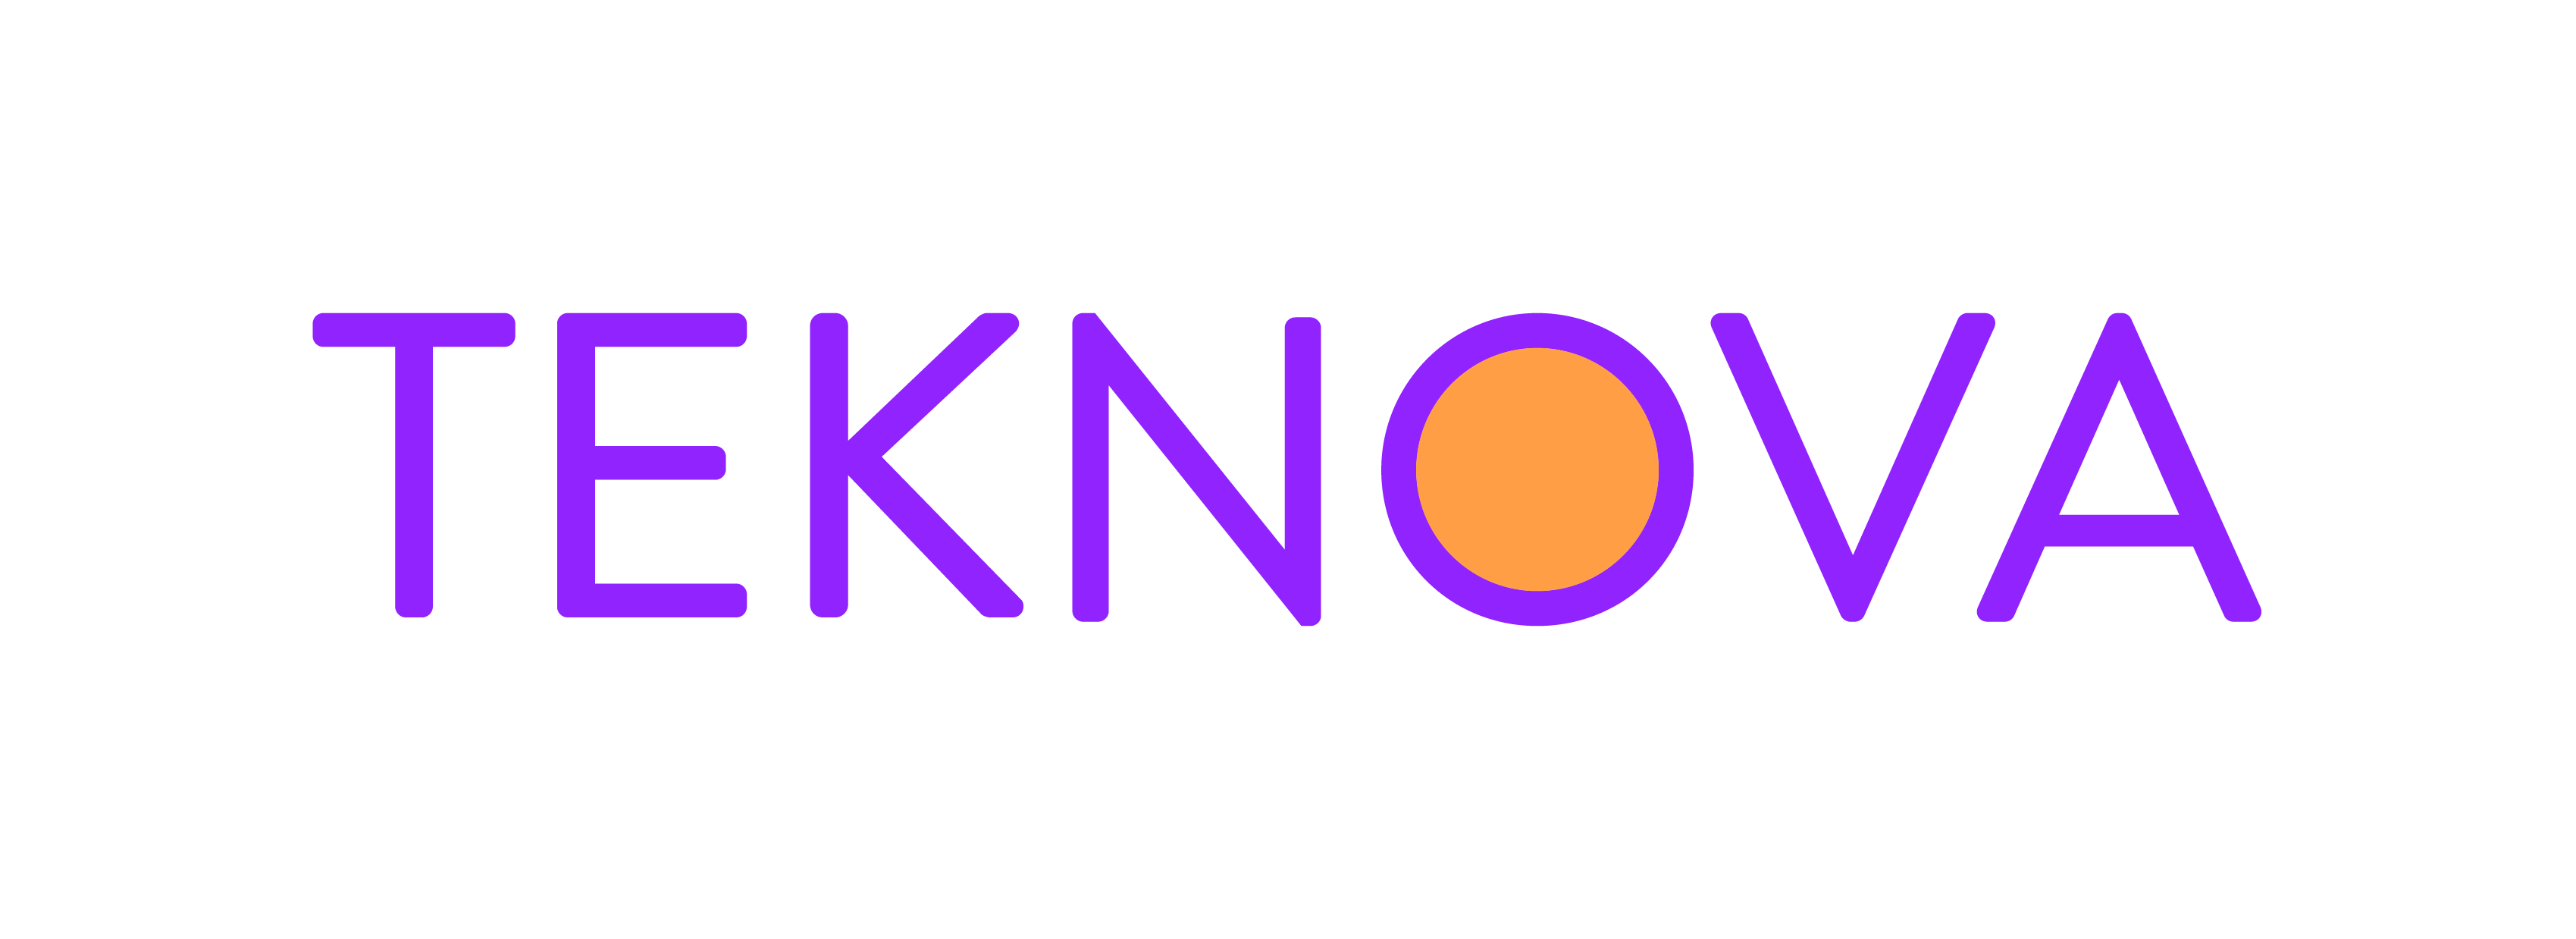 TEKNOVA Logo Pur_RGB.png